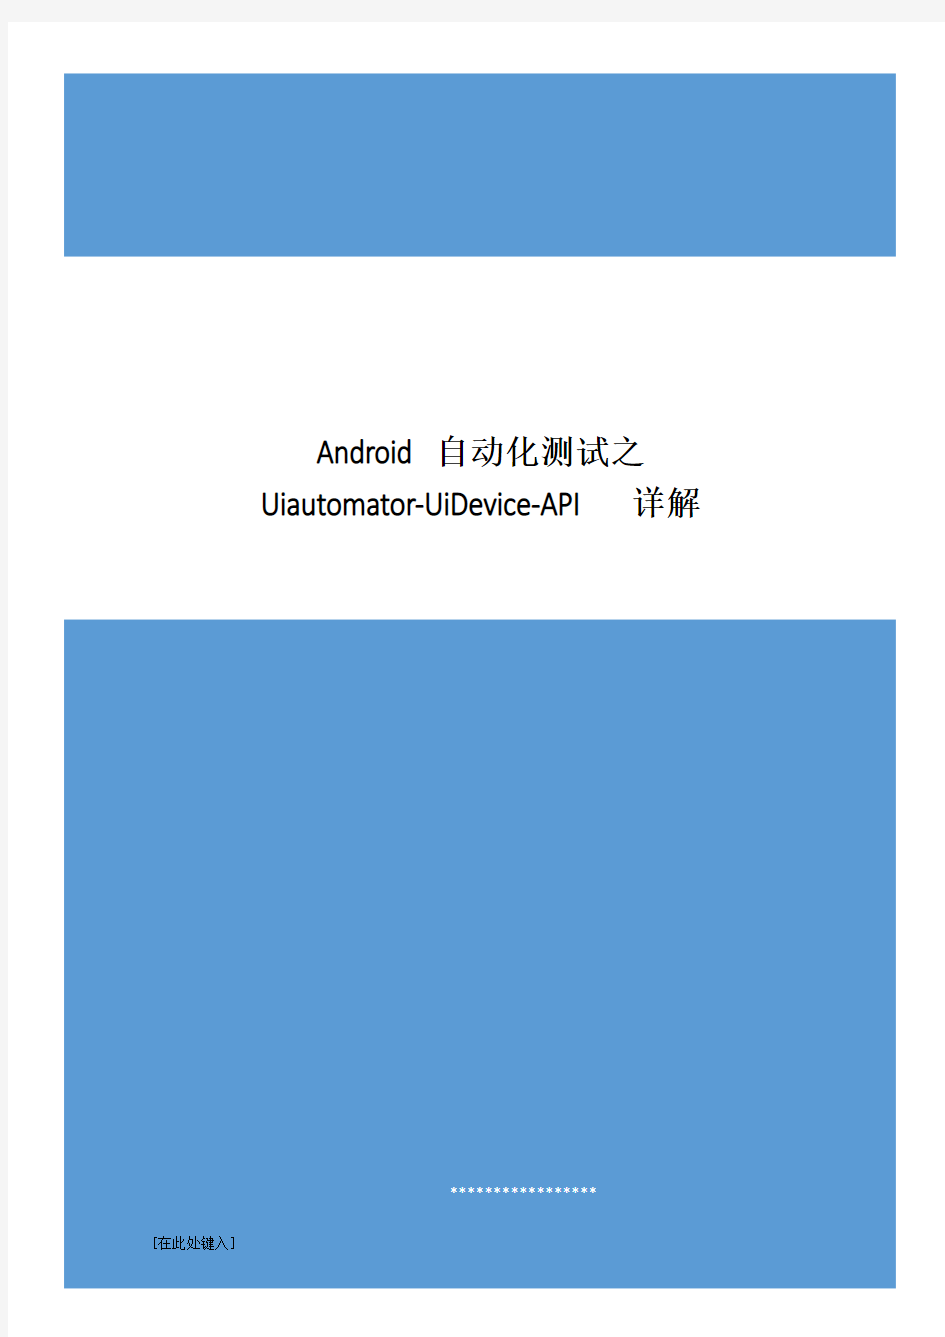 Android自动化测试之Uiautomator_UiDevice-API详解